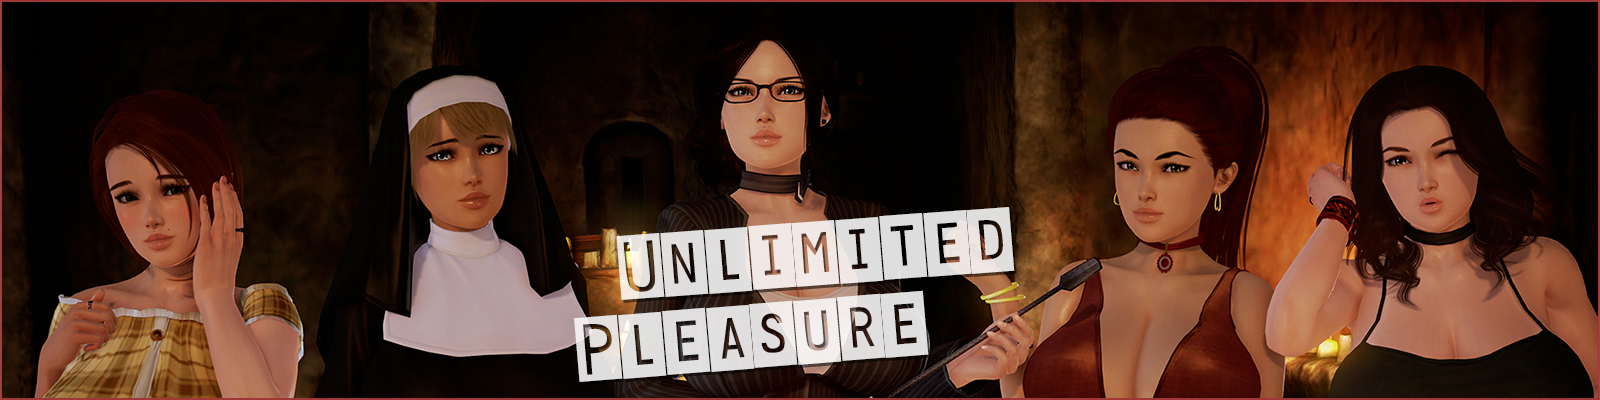 Unlimited Pleasure poster